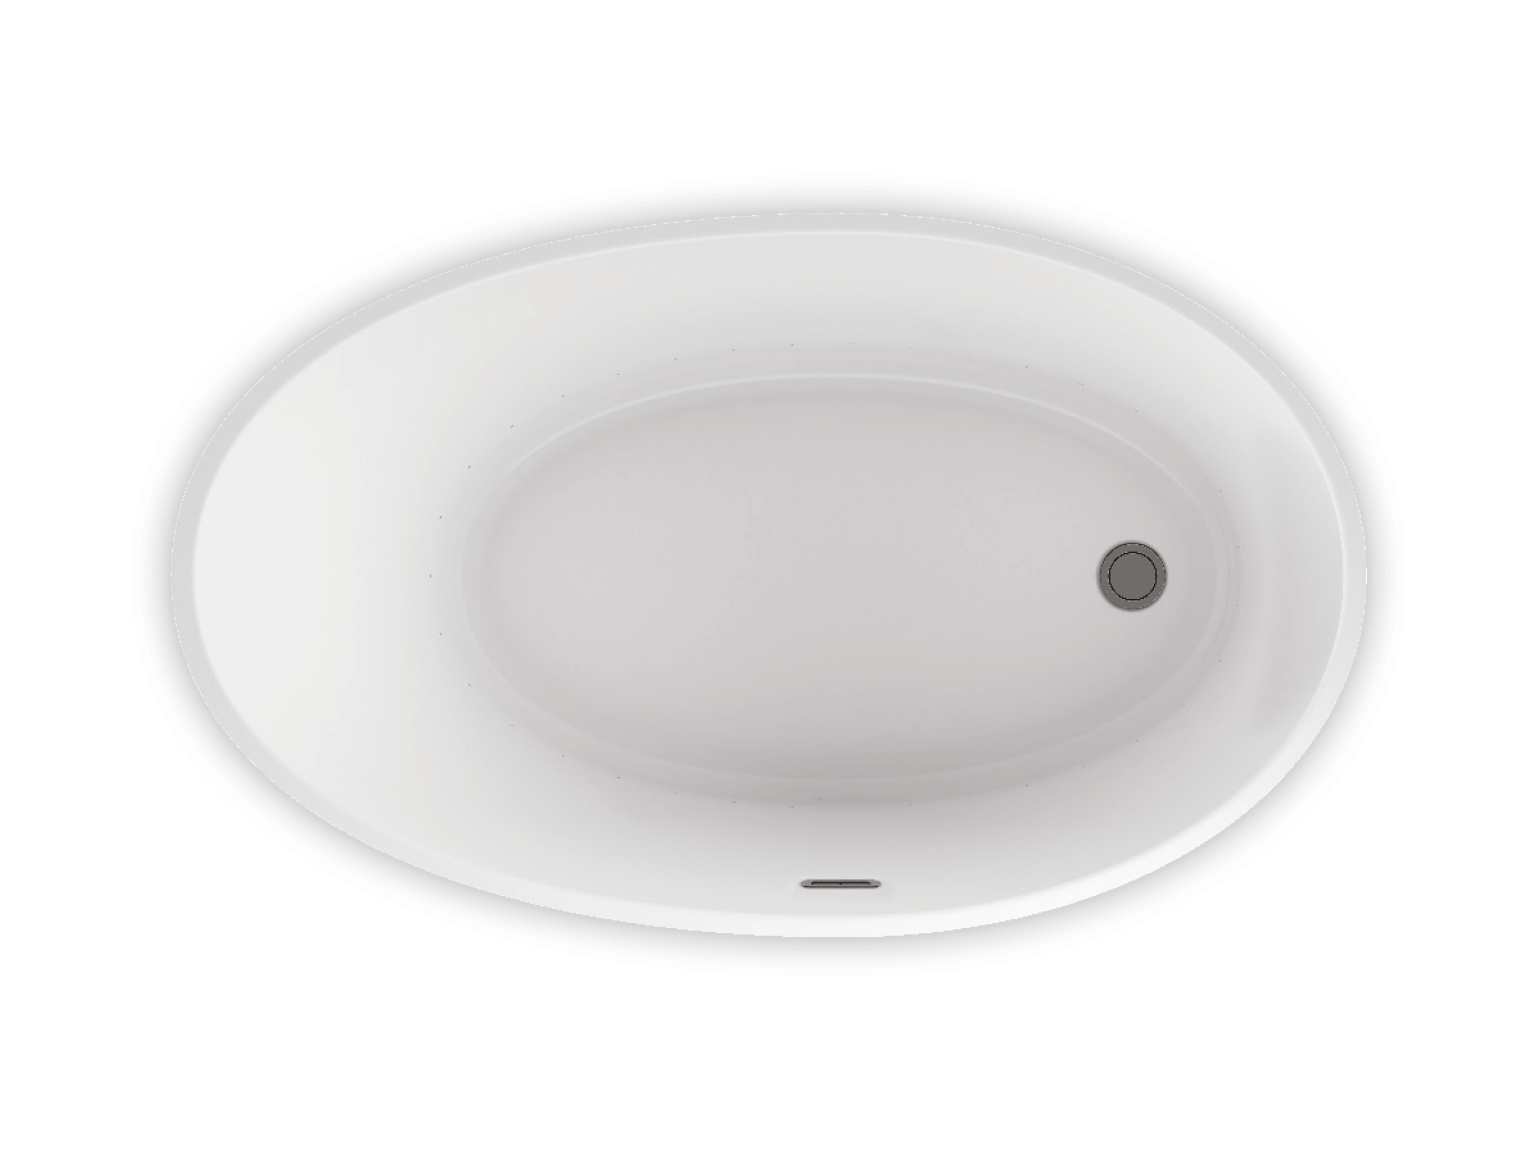 Bainultra Evanescence® 5936 freestanding air jet bathtub for your modern bathroom